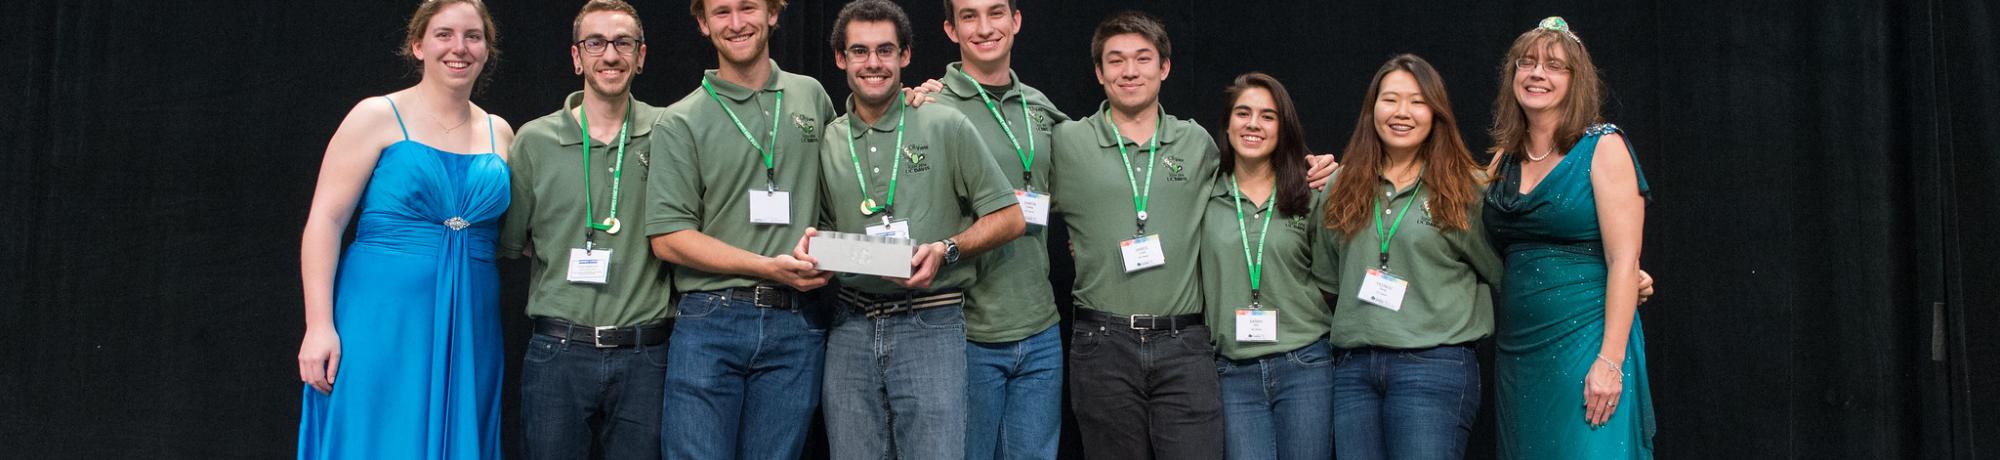 UC Davis 2014 iGEM team receives Overgraduate Grand Prize.